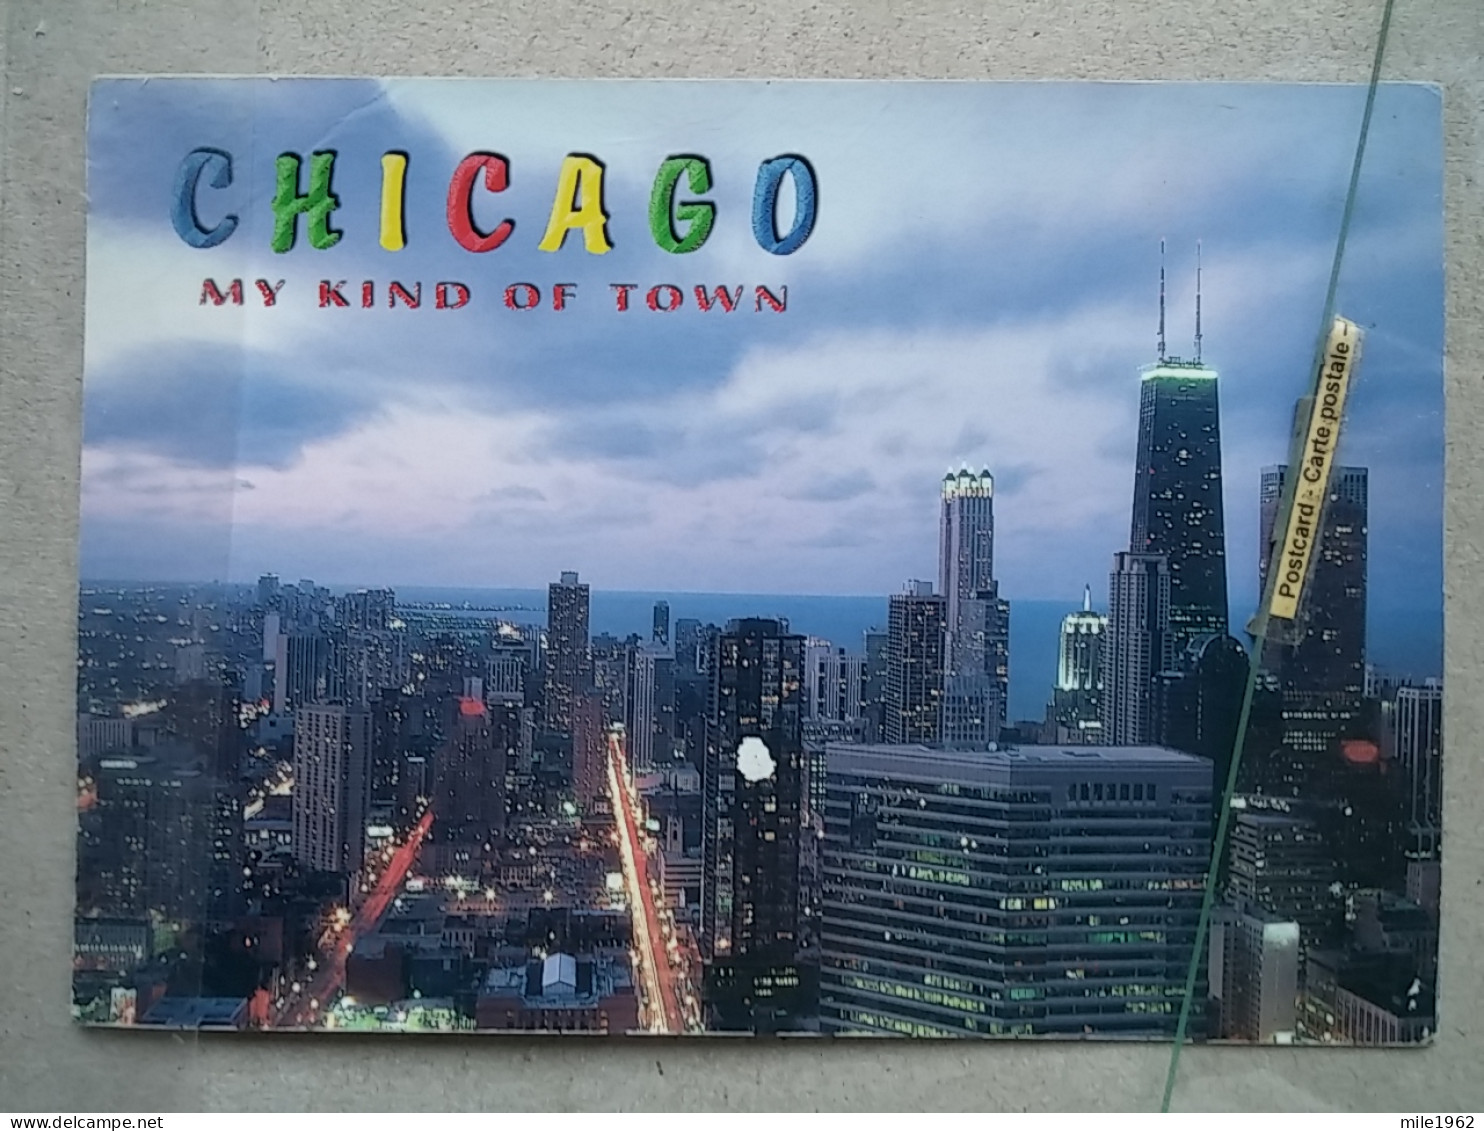 Kov 560-1 - CHICAGO, ILLINOIS,  - Chicago